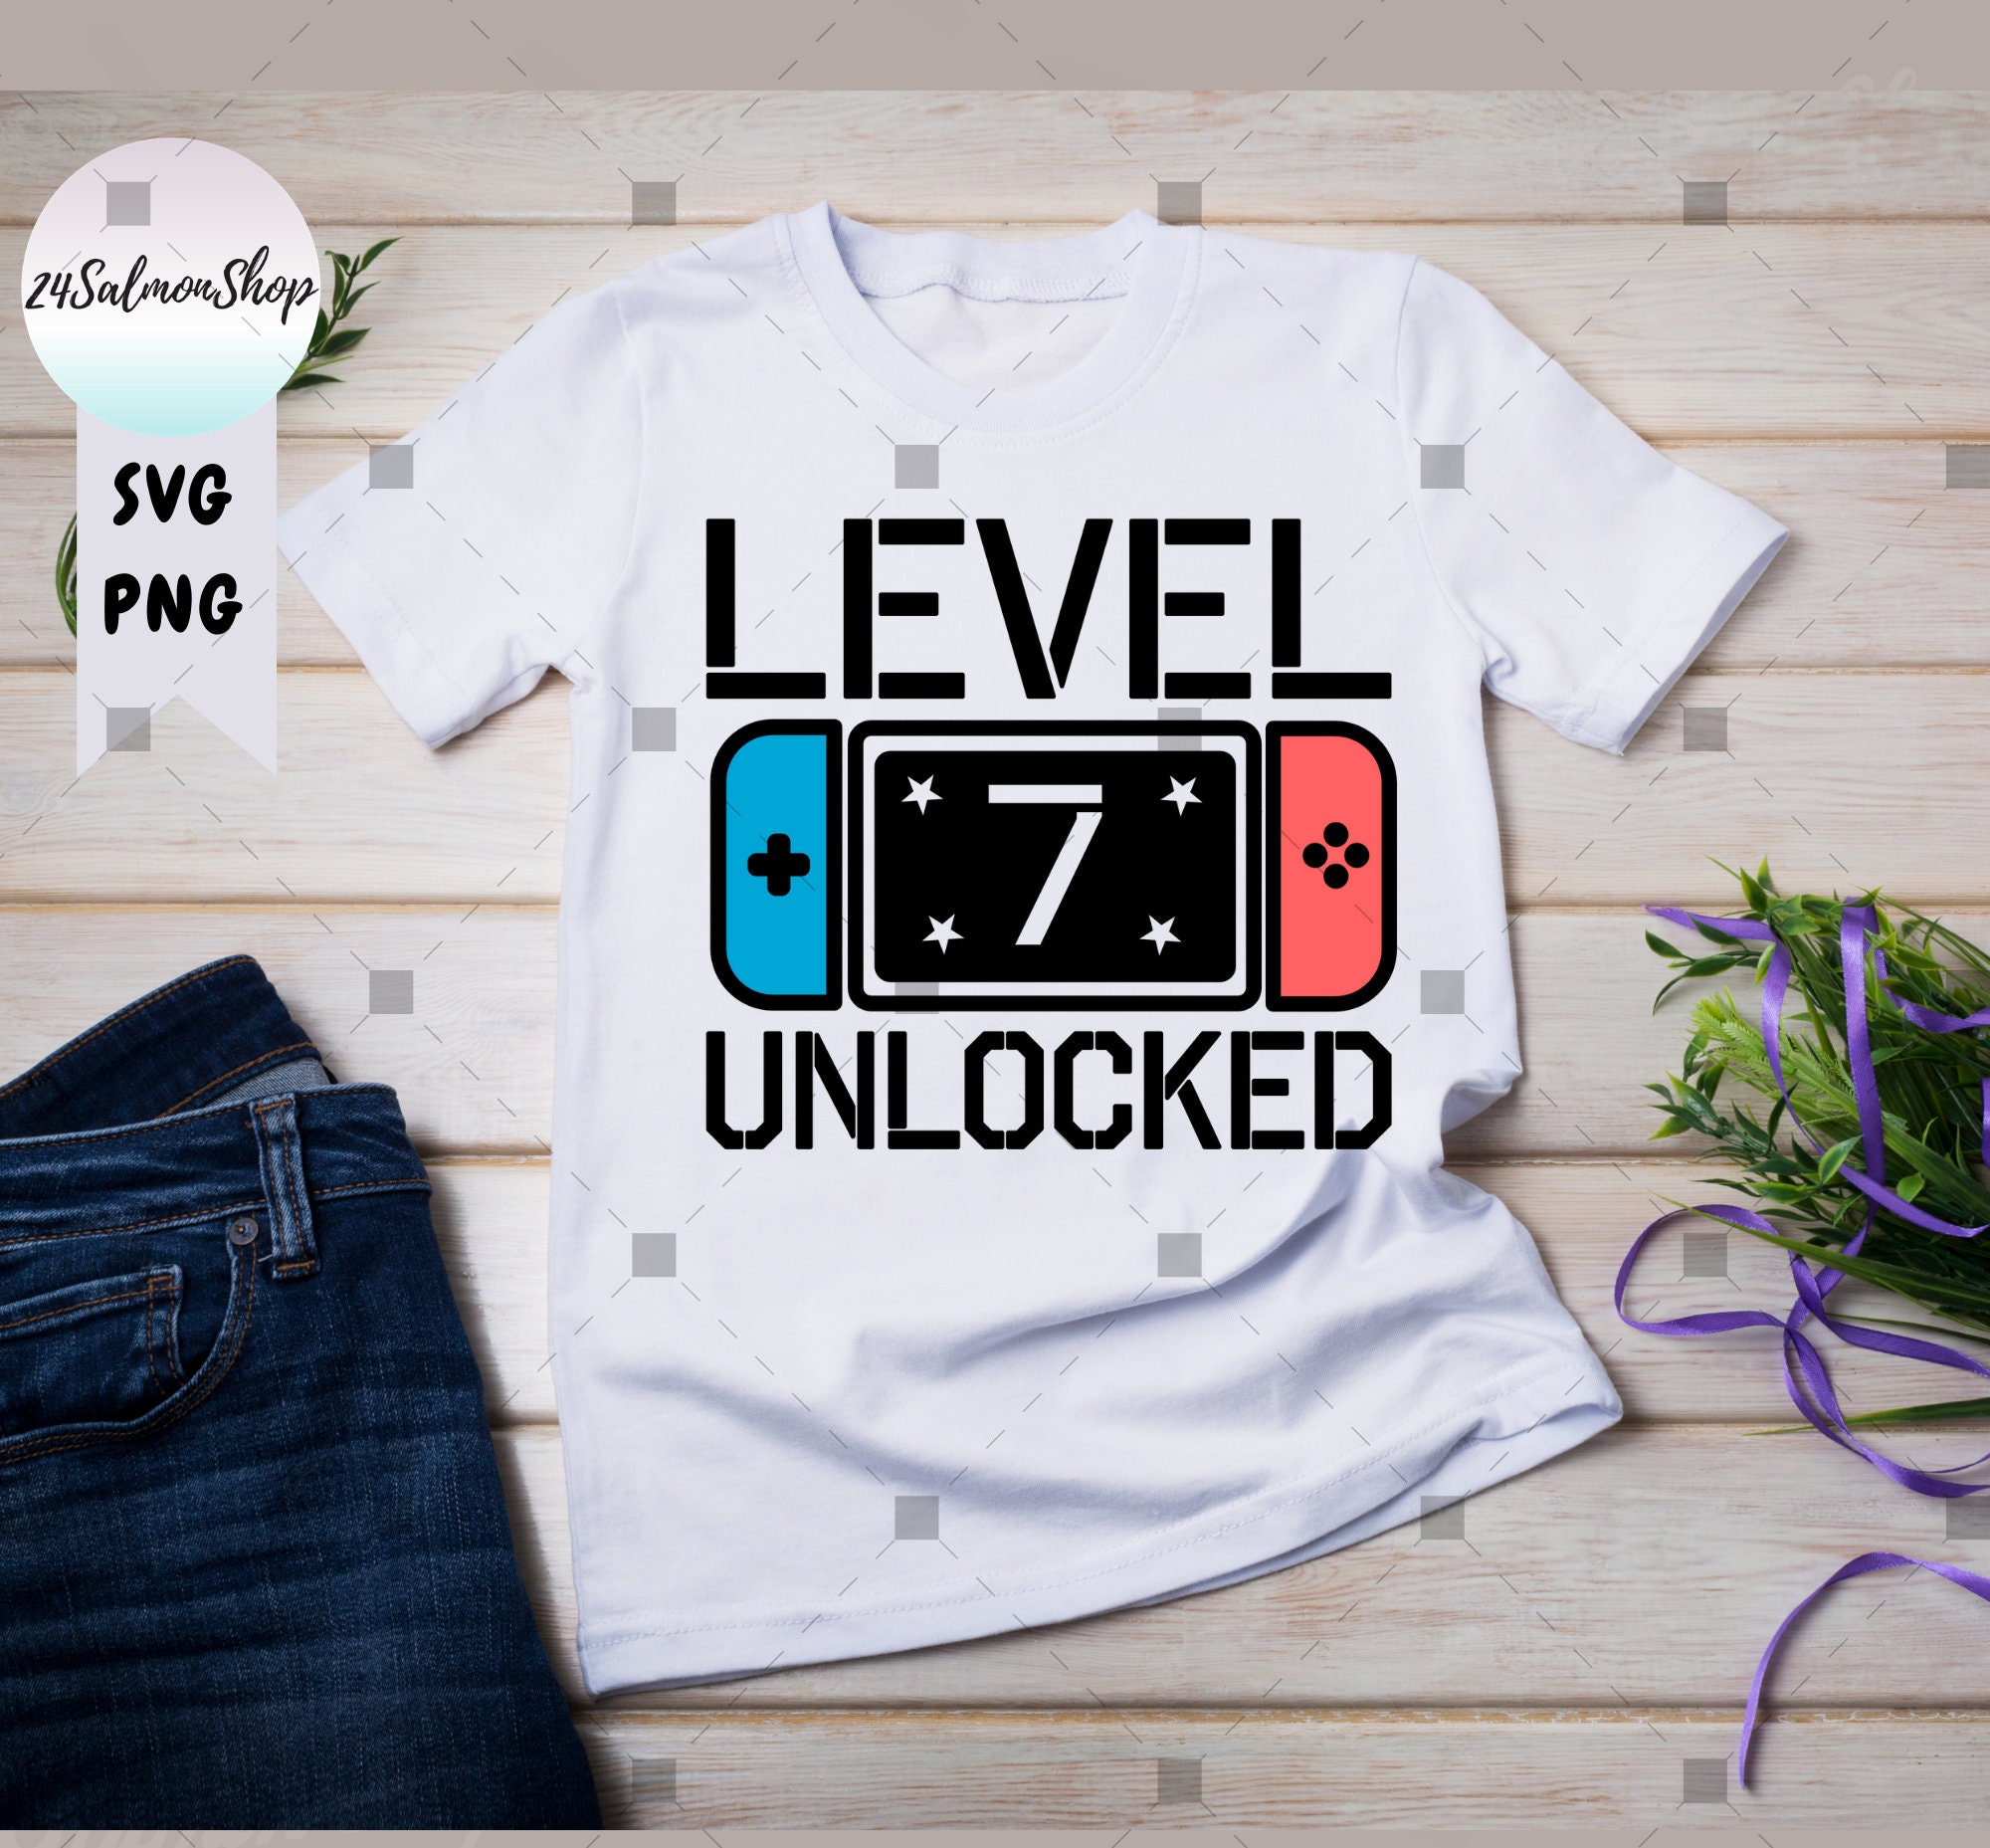 LEVEL 7 UNLOCKED Essential T-Shirt by SAI335